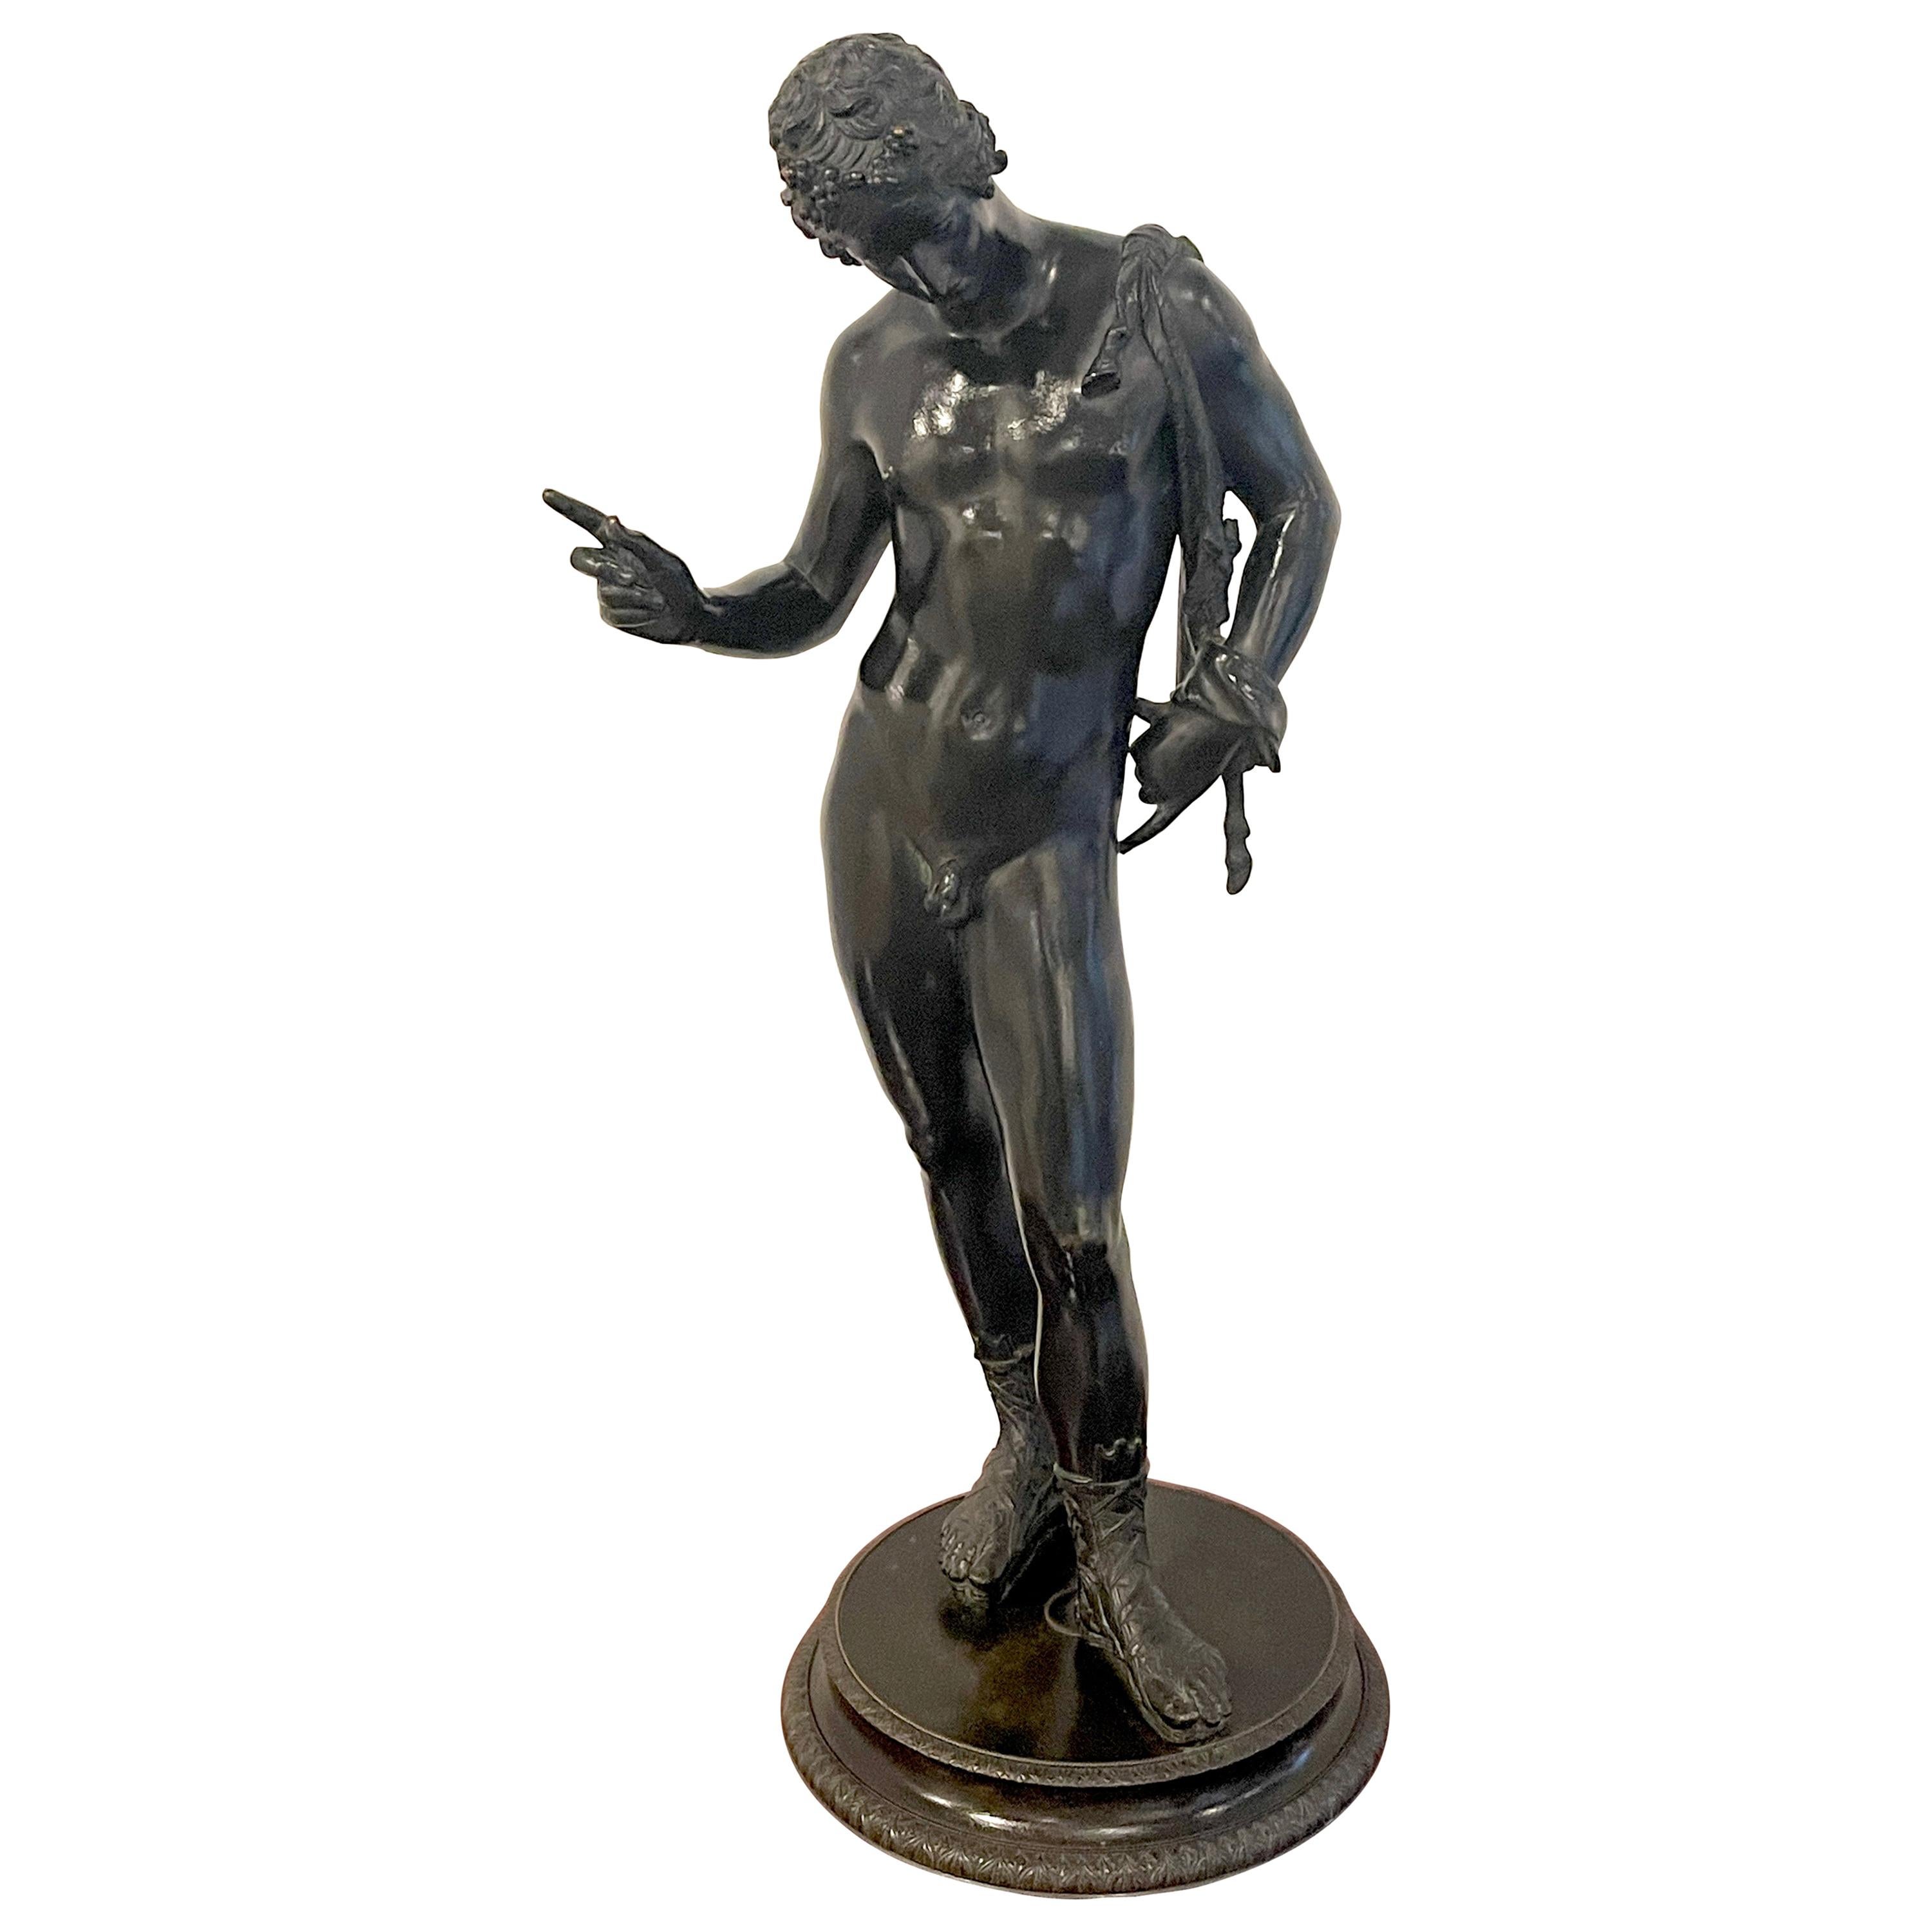 Grand Tour, patinierte Bronzefigur des Narzissen, signiert, M. Amodio Napoli